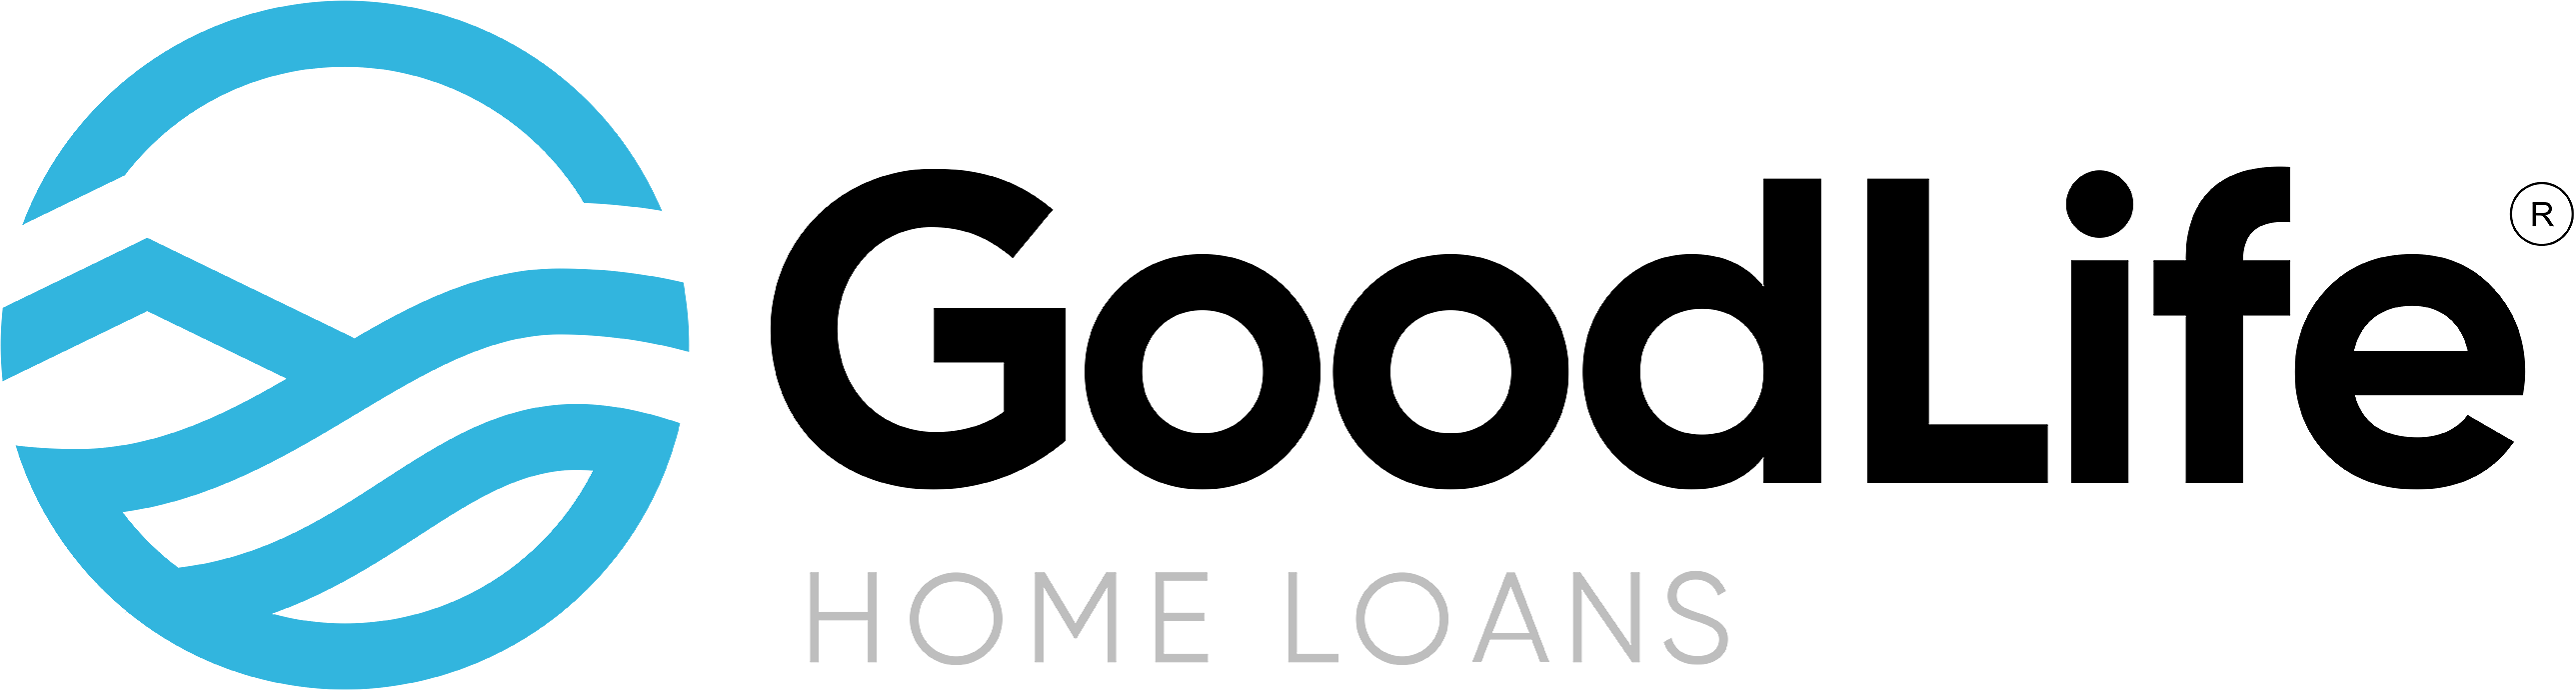 GoodLife Home Loans